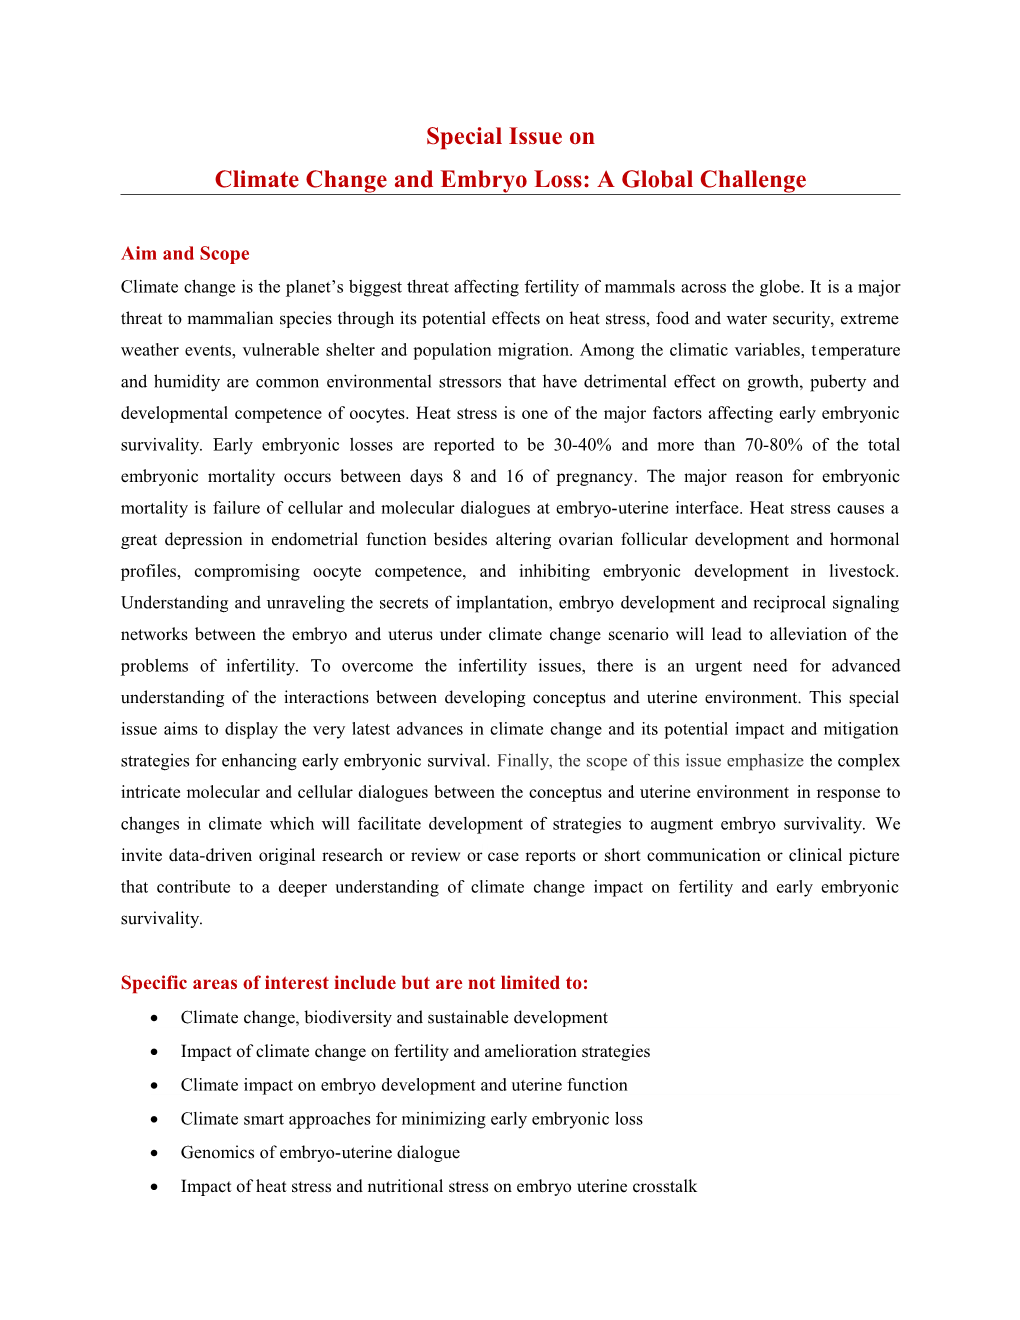 Climate Change and Embryo Loss: a Global Challenge